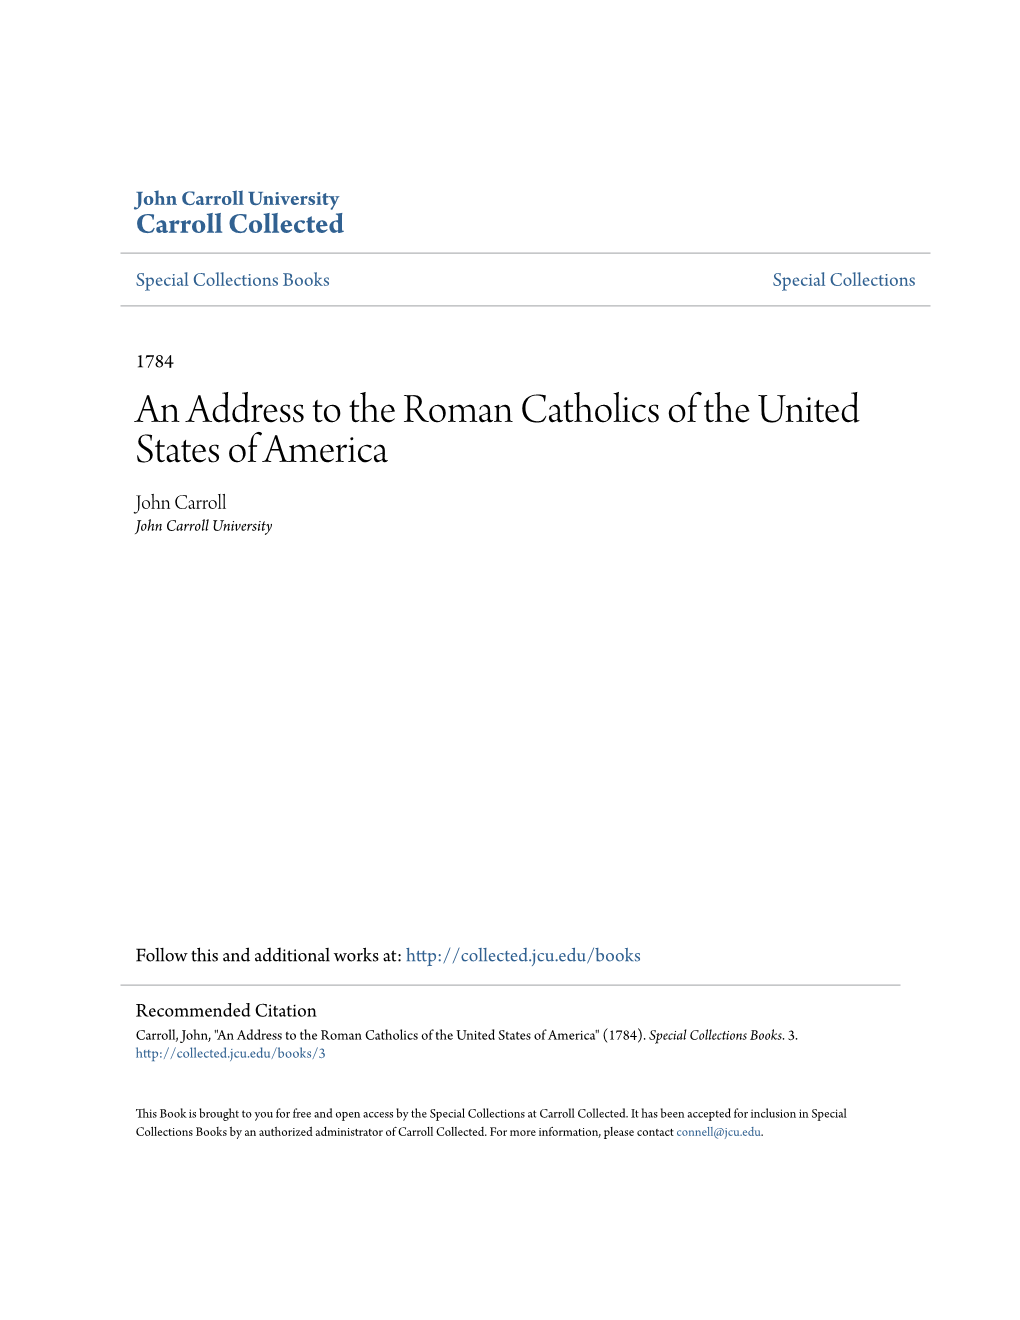 An Address to the Roman Catholics of the United States of America John Carroll John Carroll University